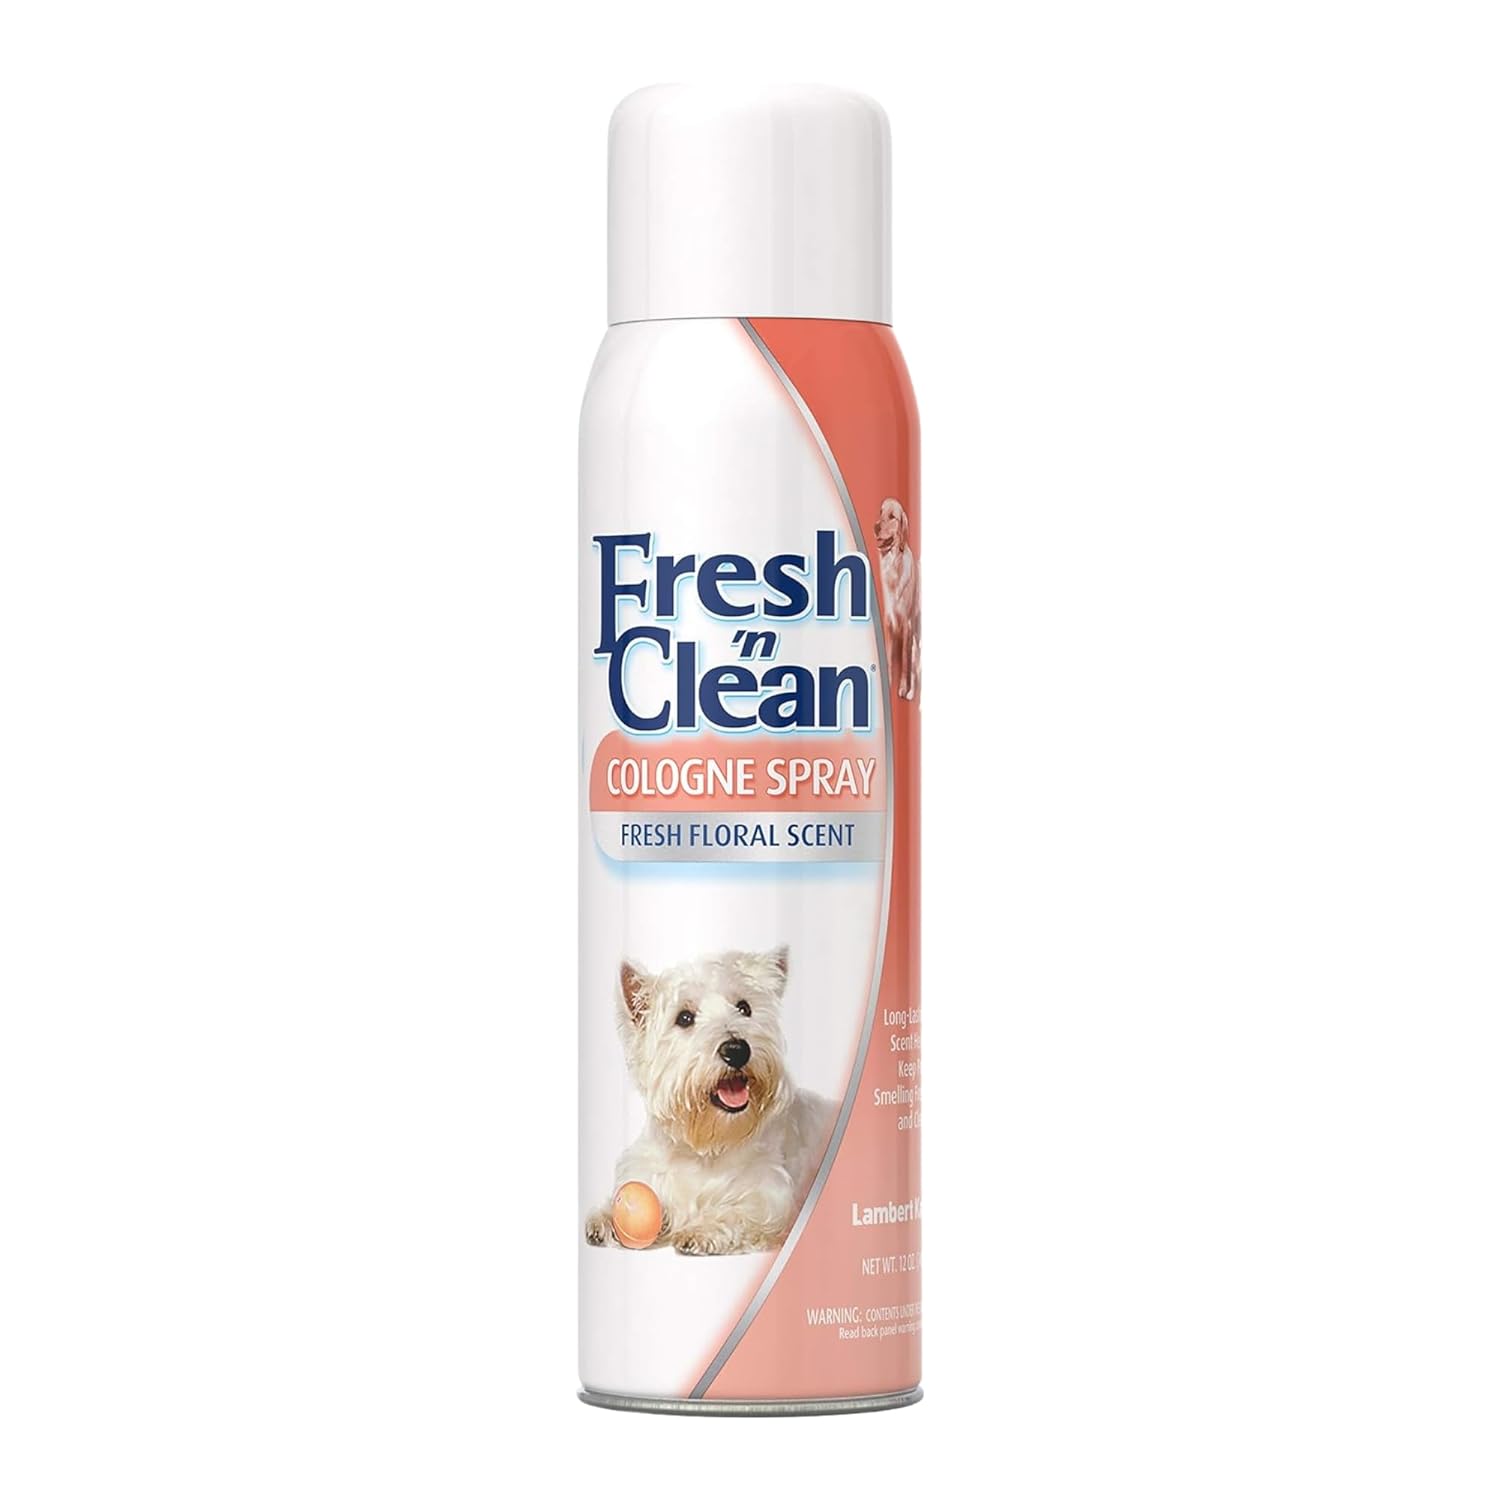 Pet-Ag Fresh n Clean Cologne Spray - Fresh Floral Scent - 12 oz - Controls Odor & Keeps Dogs Smelling Fresh